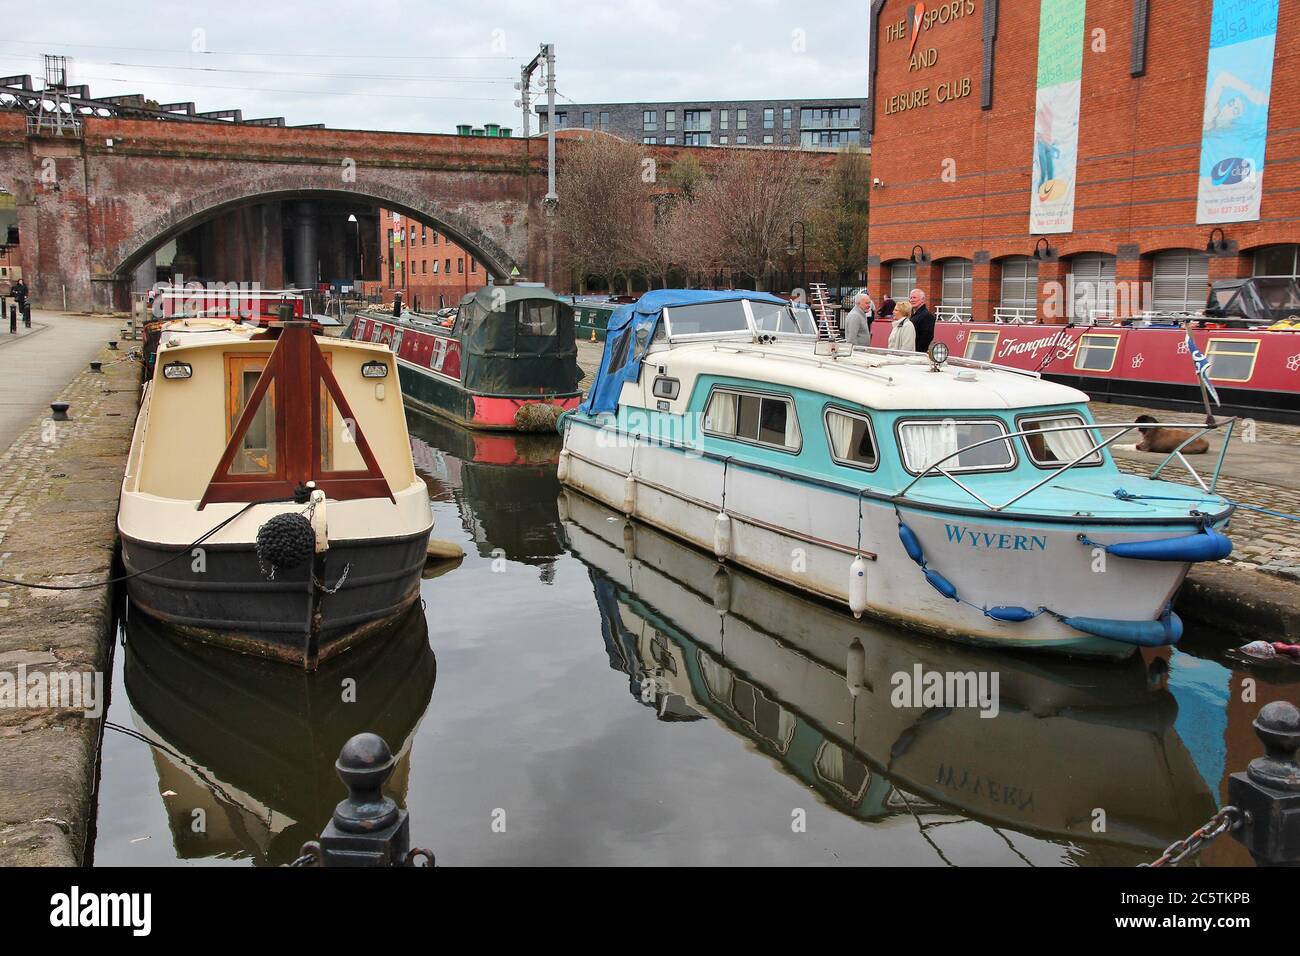 MANCHESTER, UK - APRIL 21, 2013: People visit Castlefield canals area in Manchester, UK. Castlefield is an Urban Heritage Park since 1982. Stock Photo